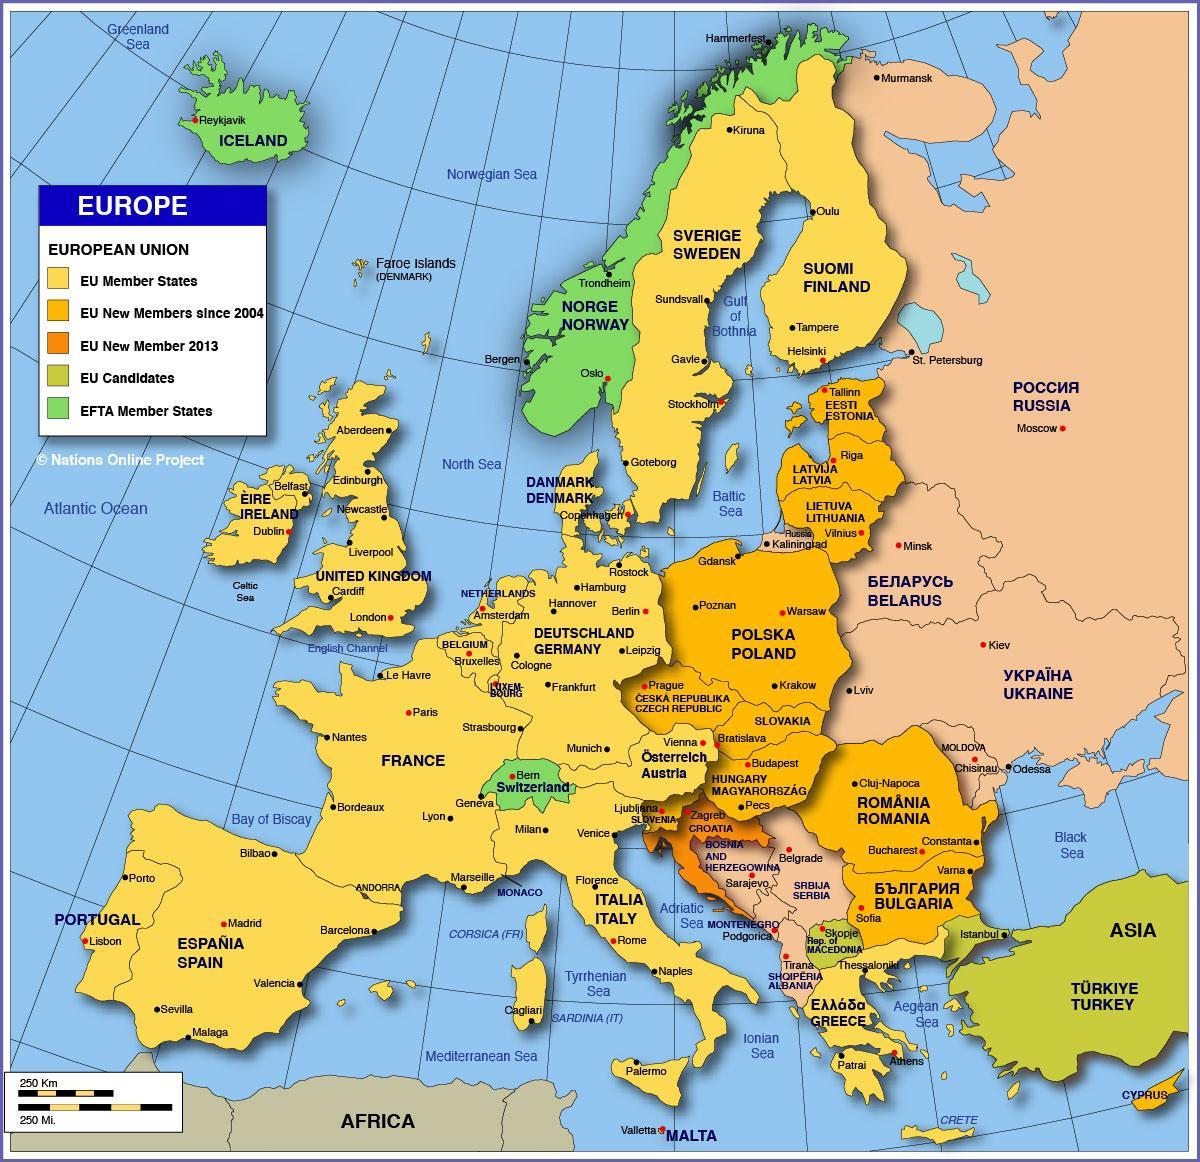 Moskva på kort over europa